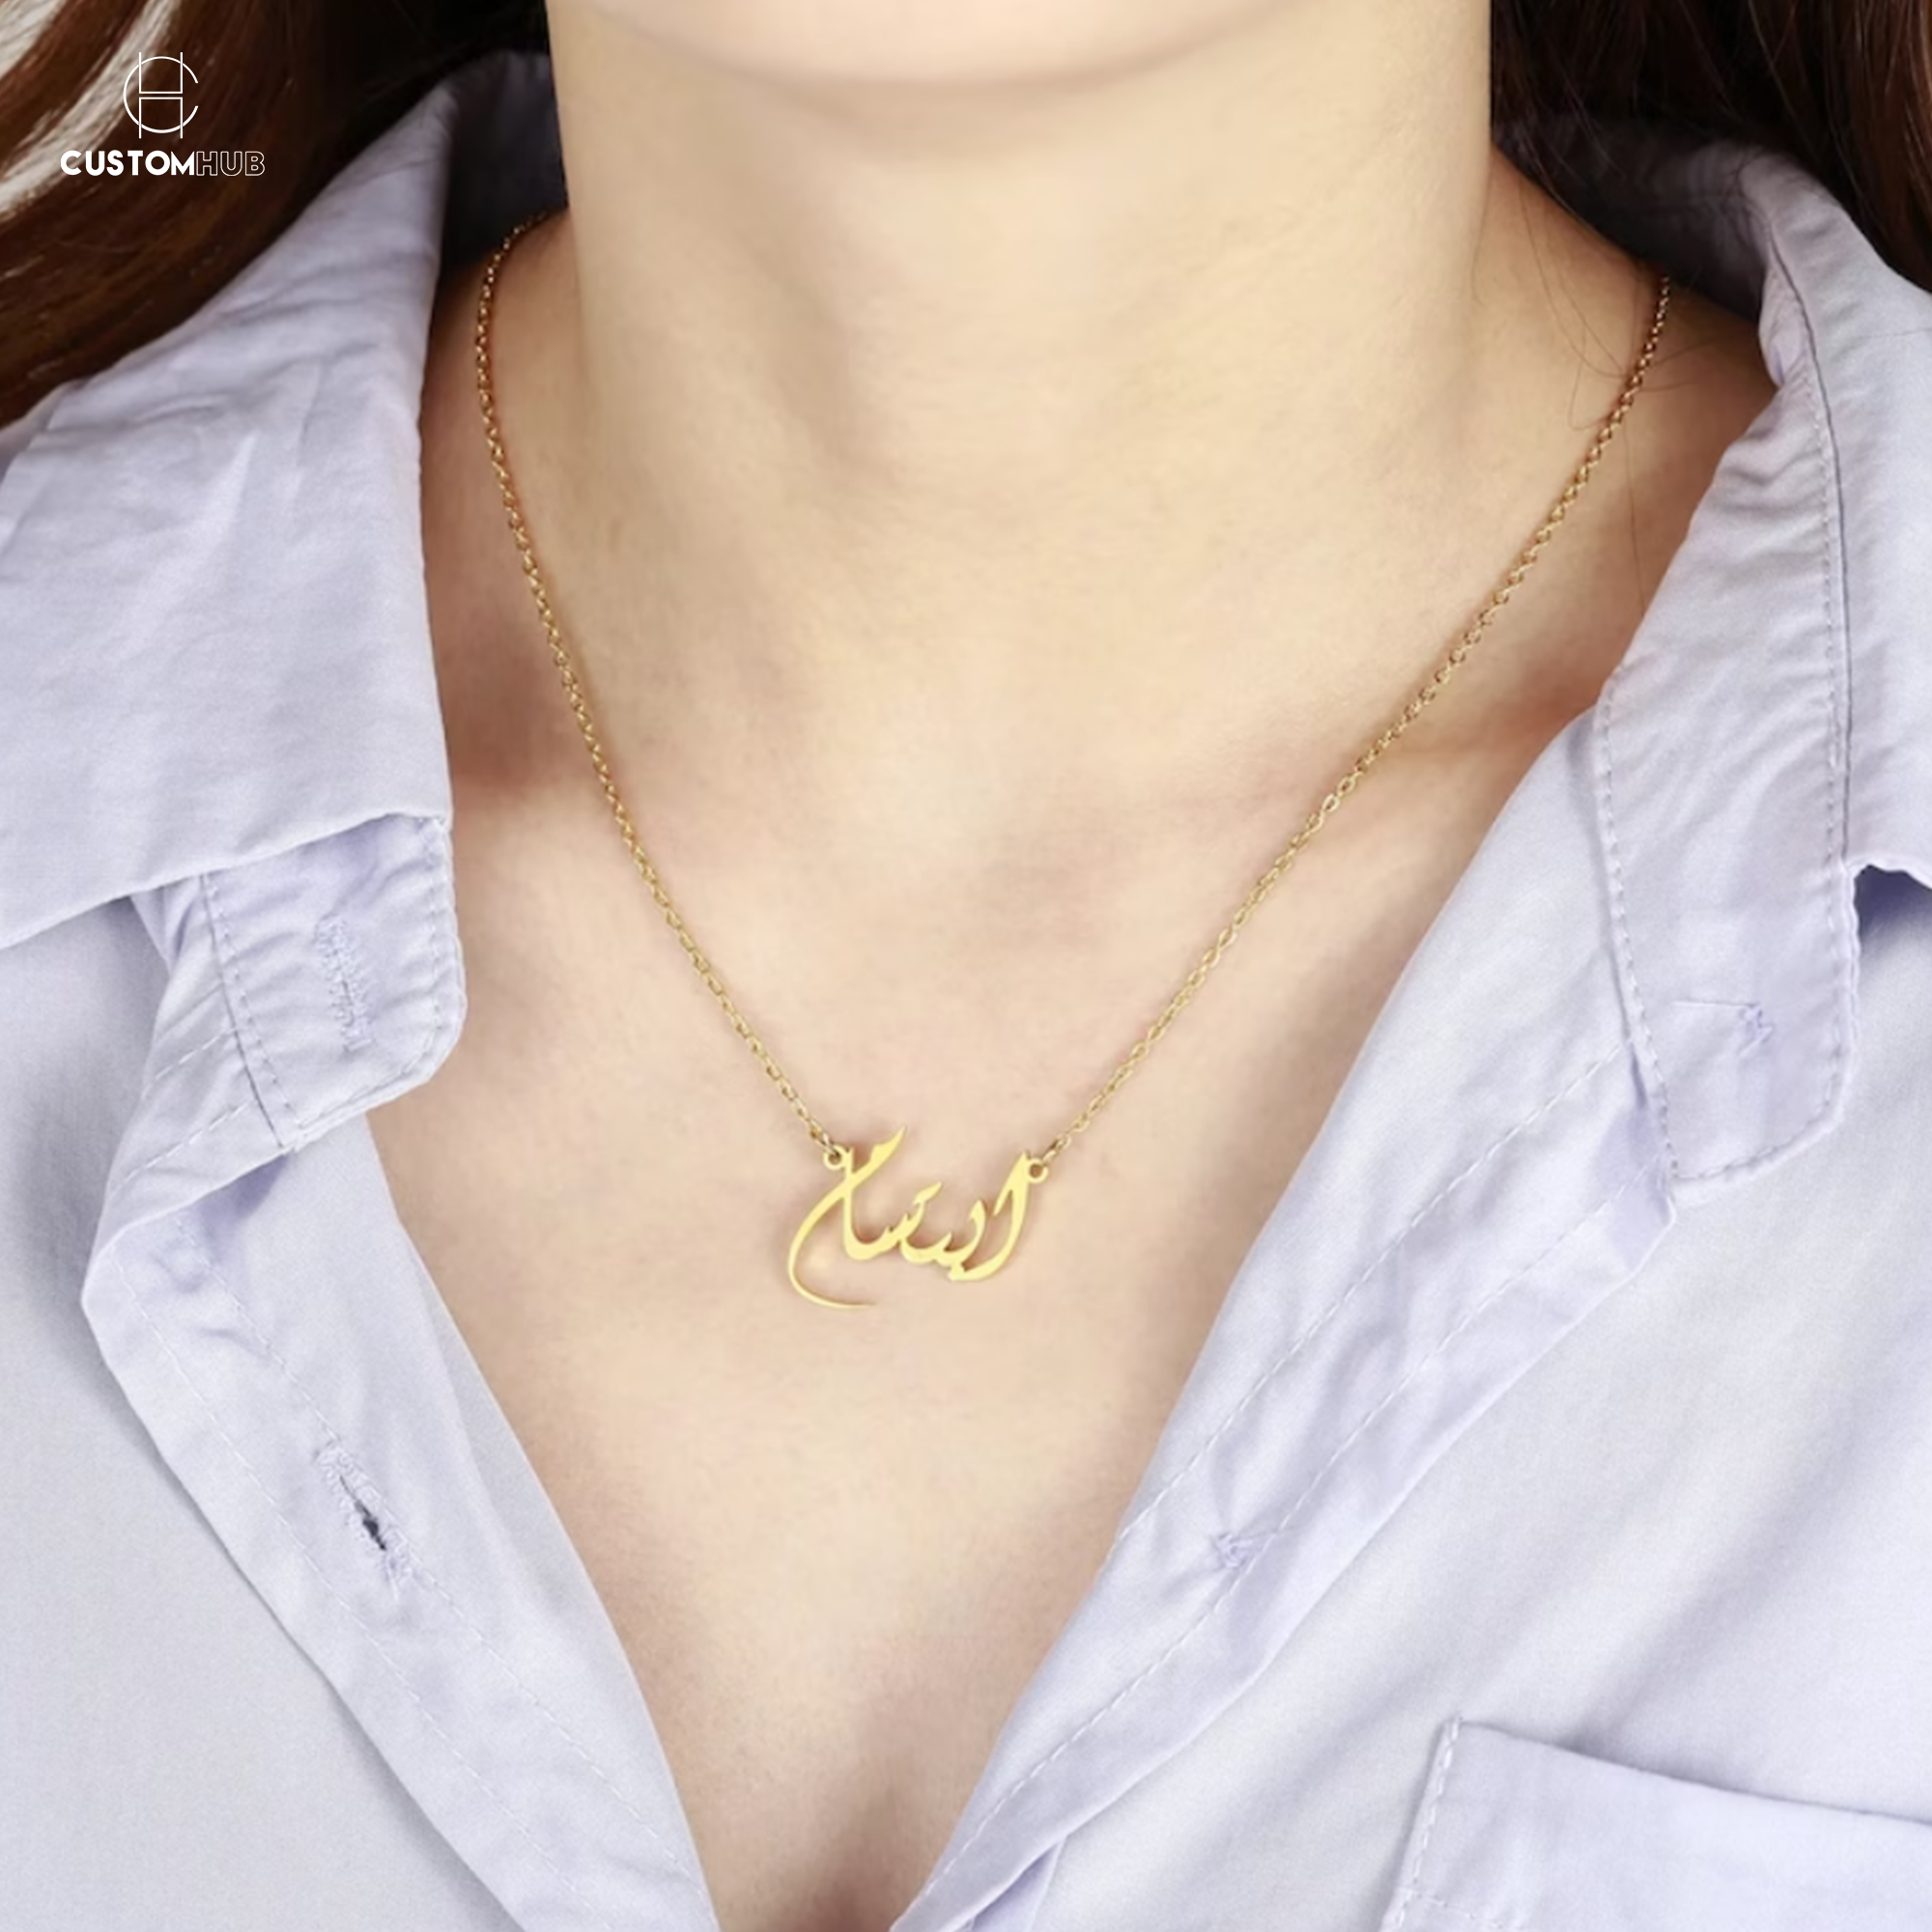 Customize Arabic Name Necklace